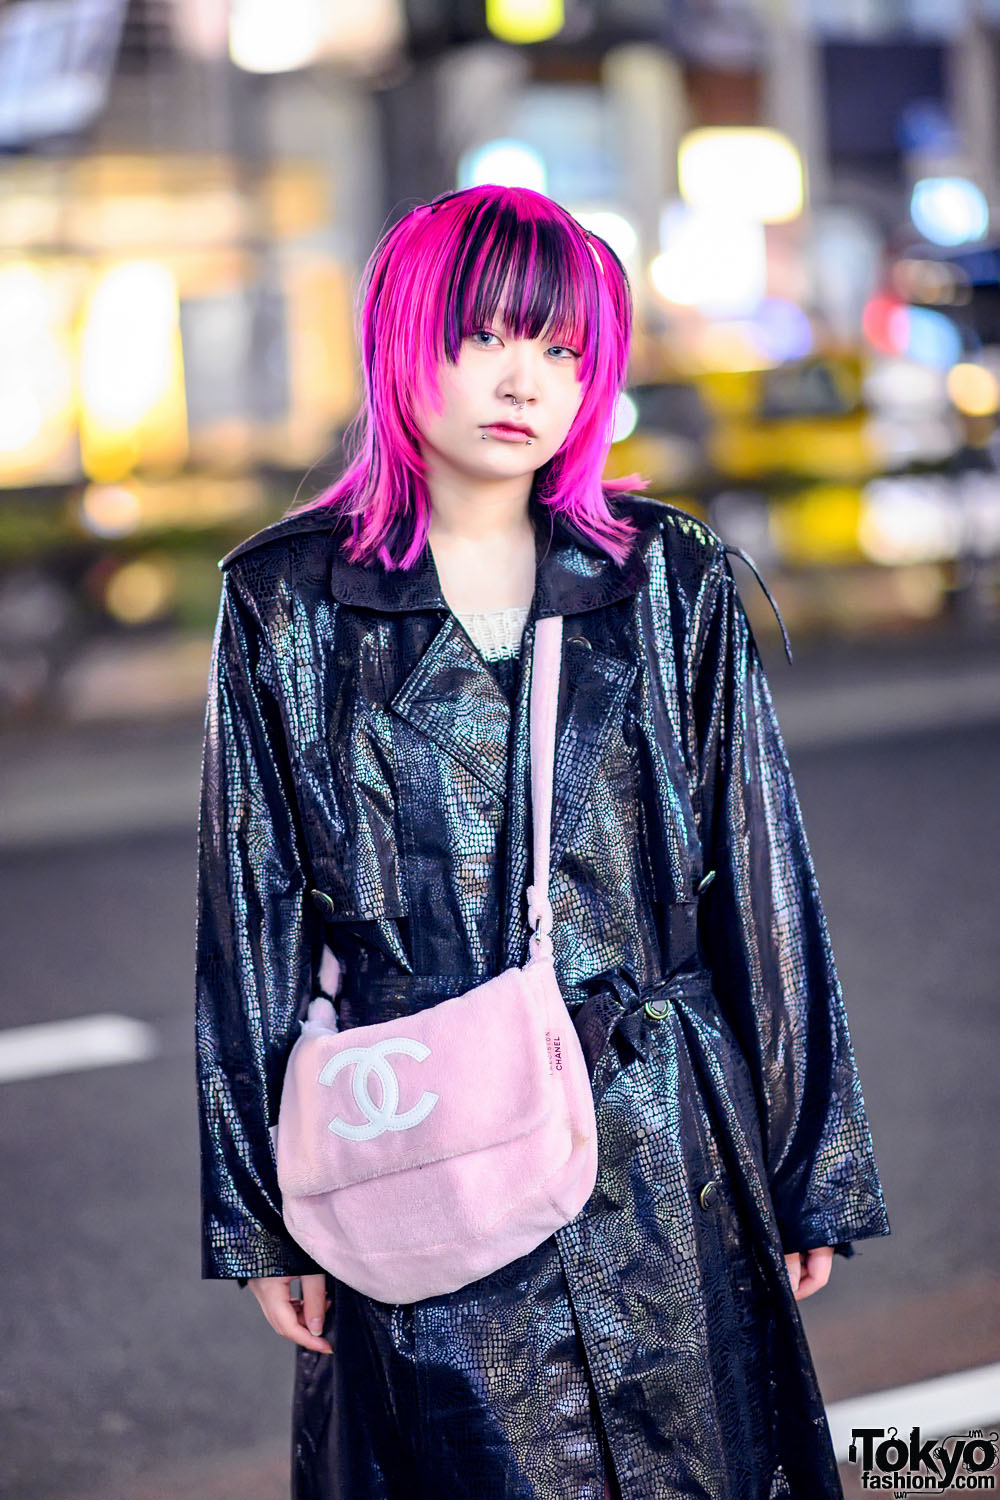 Harajuku Girl w/ Pink Streaked Hairstyle, Chanel Plush Bag, Leg